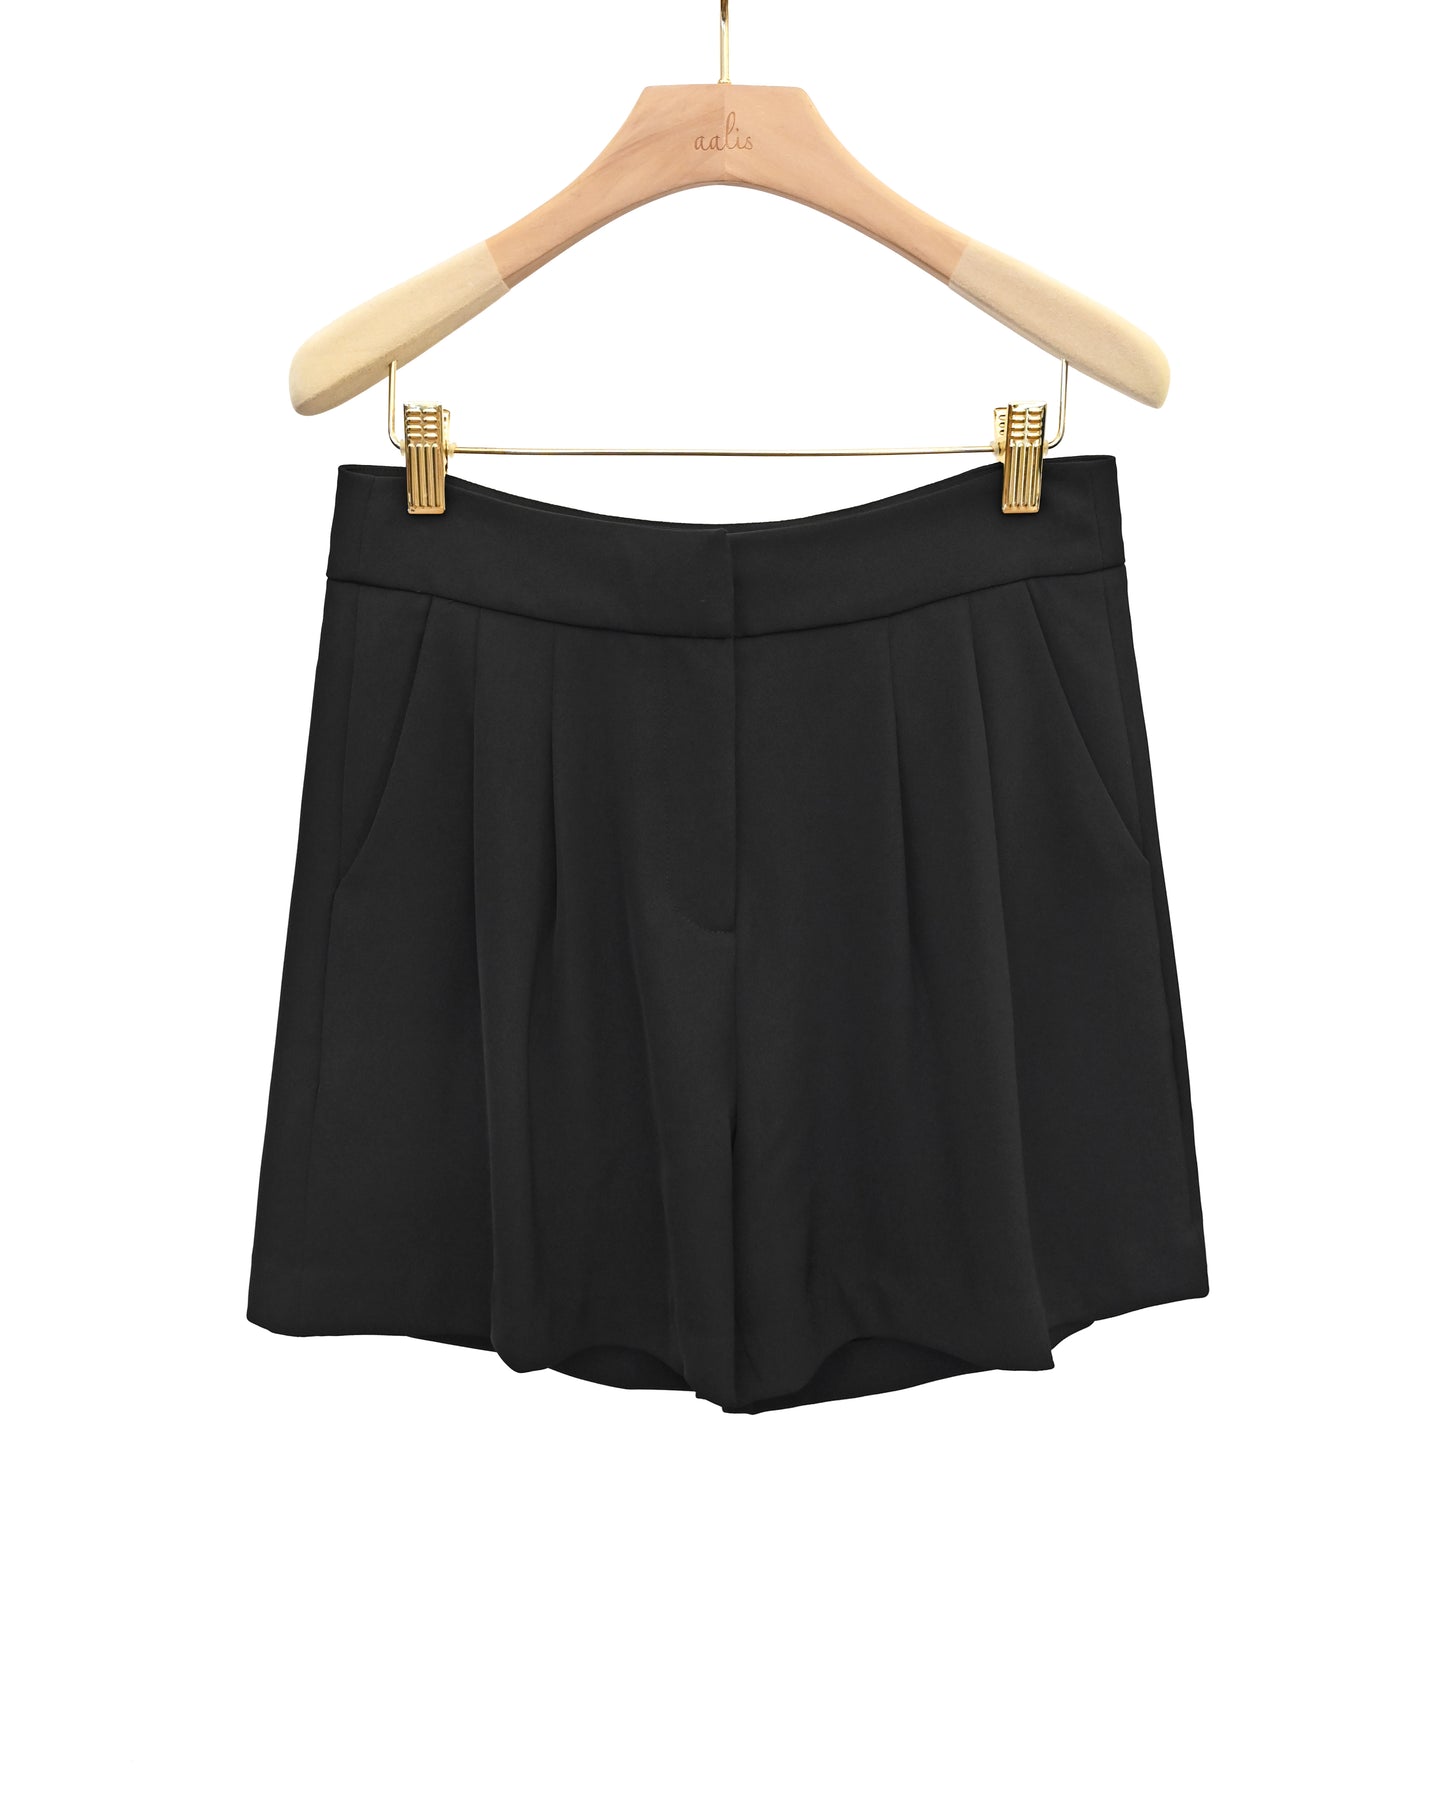 aalis UNA front pleated shorts (Black)